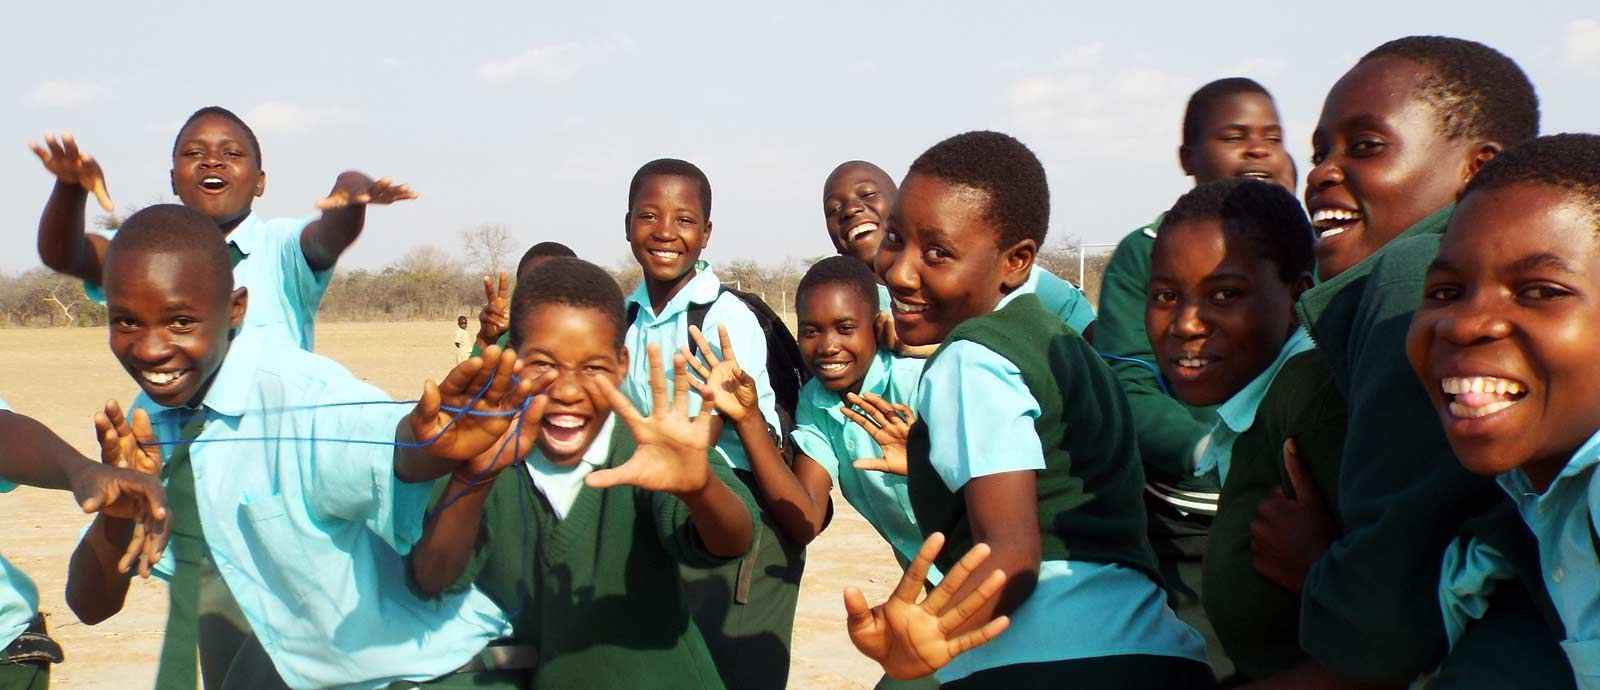 Pausenspaß - Kinder der Oberschule in Simbabwe